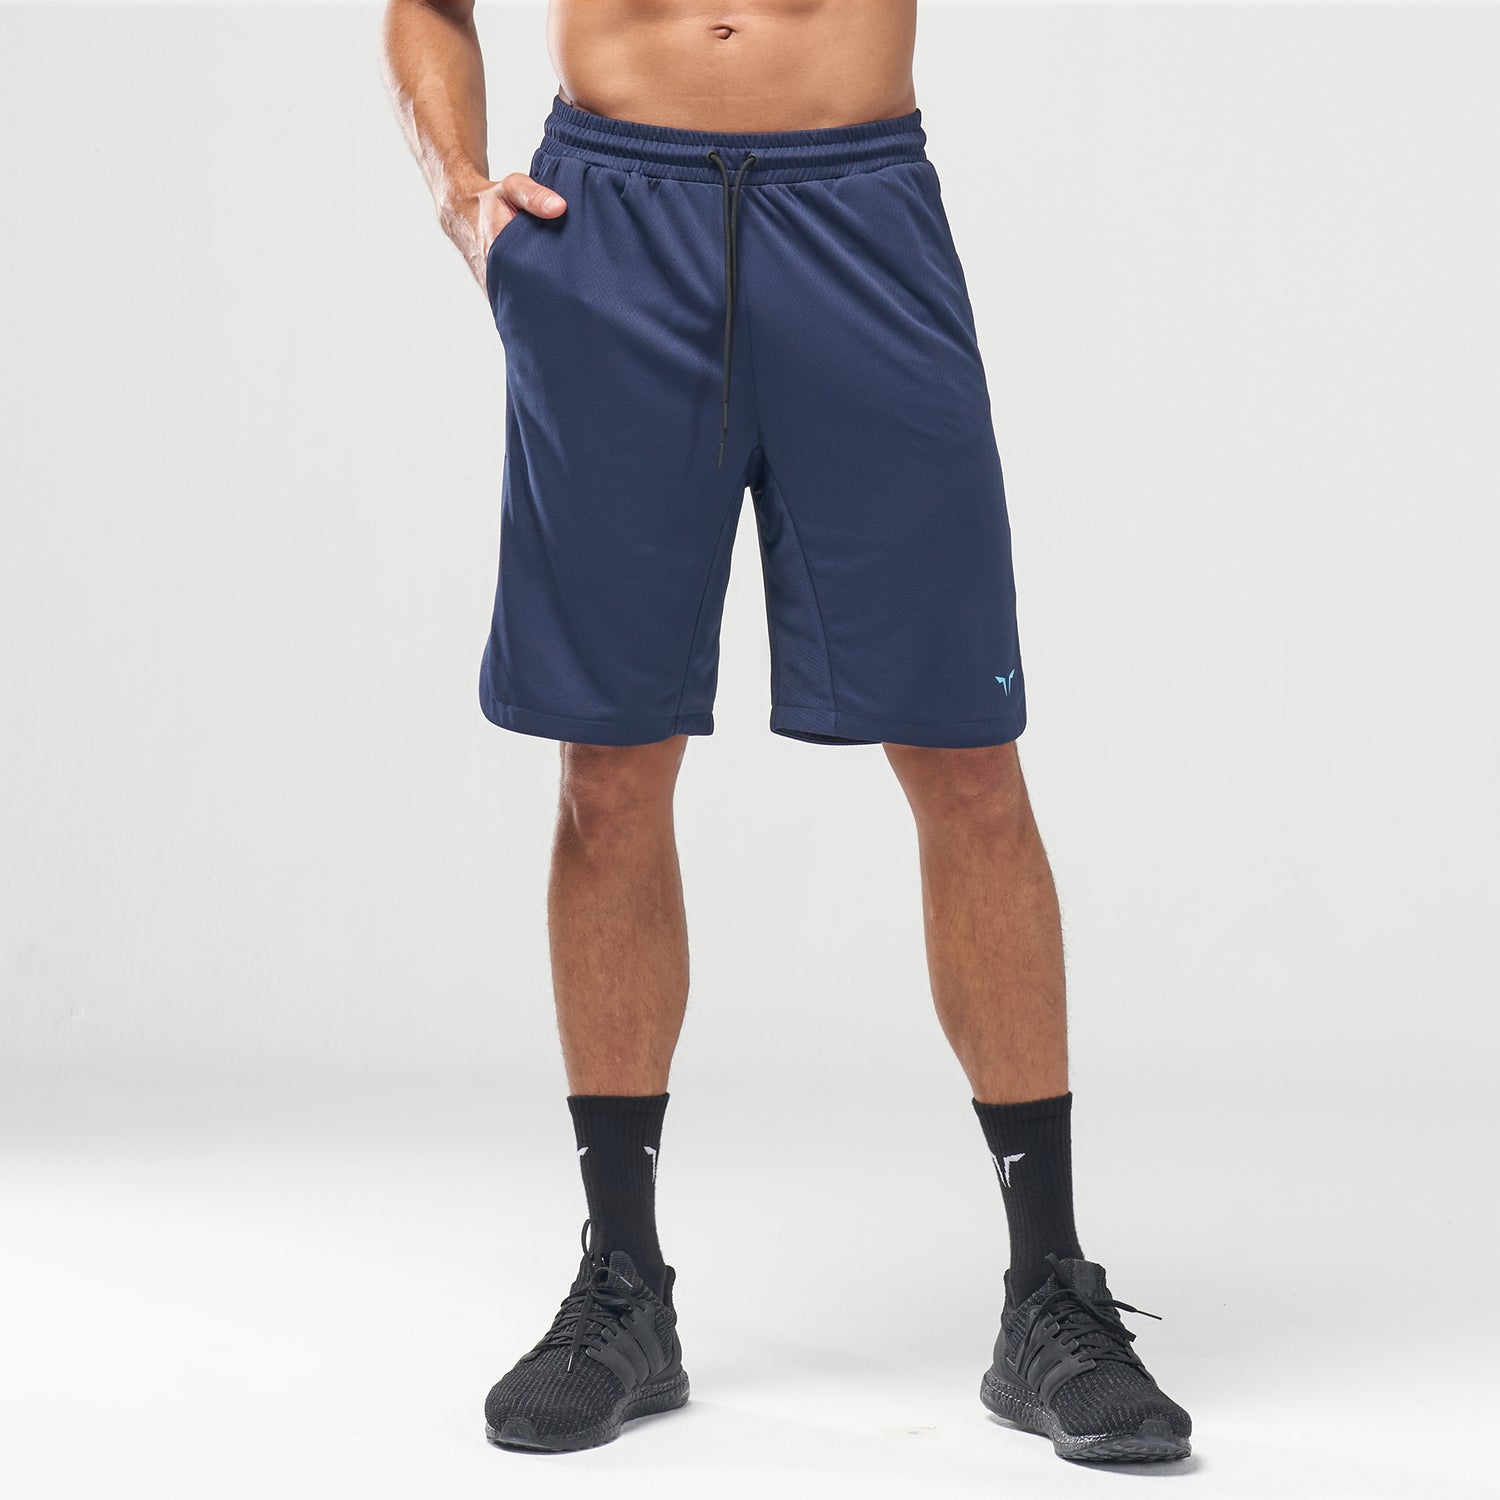 squatwolf-gym-wear-code-basketball-shorts-blue-workout-short-for-men